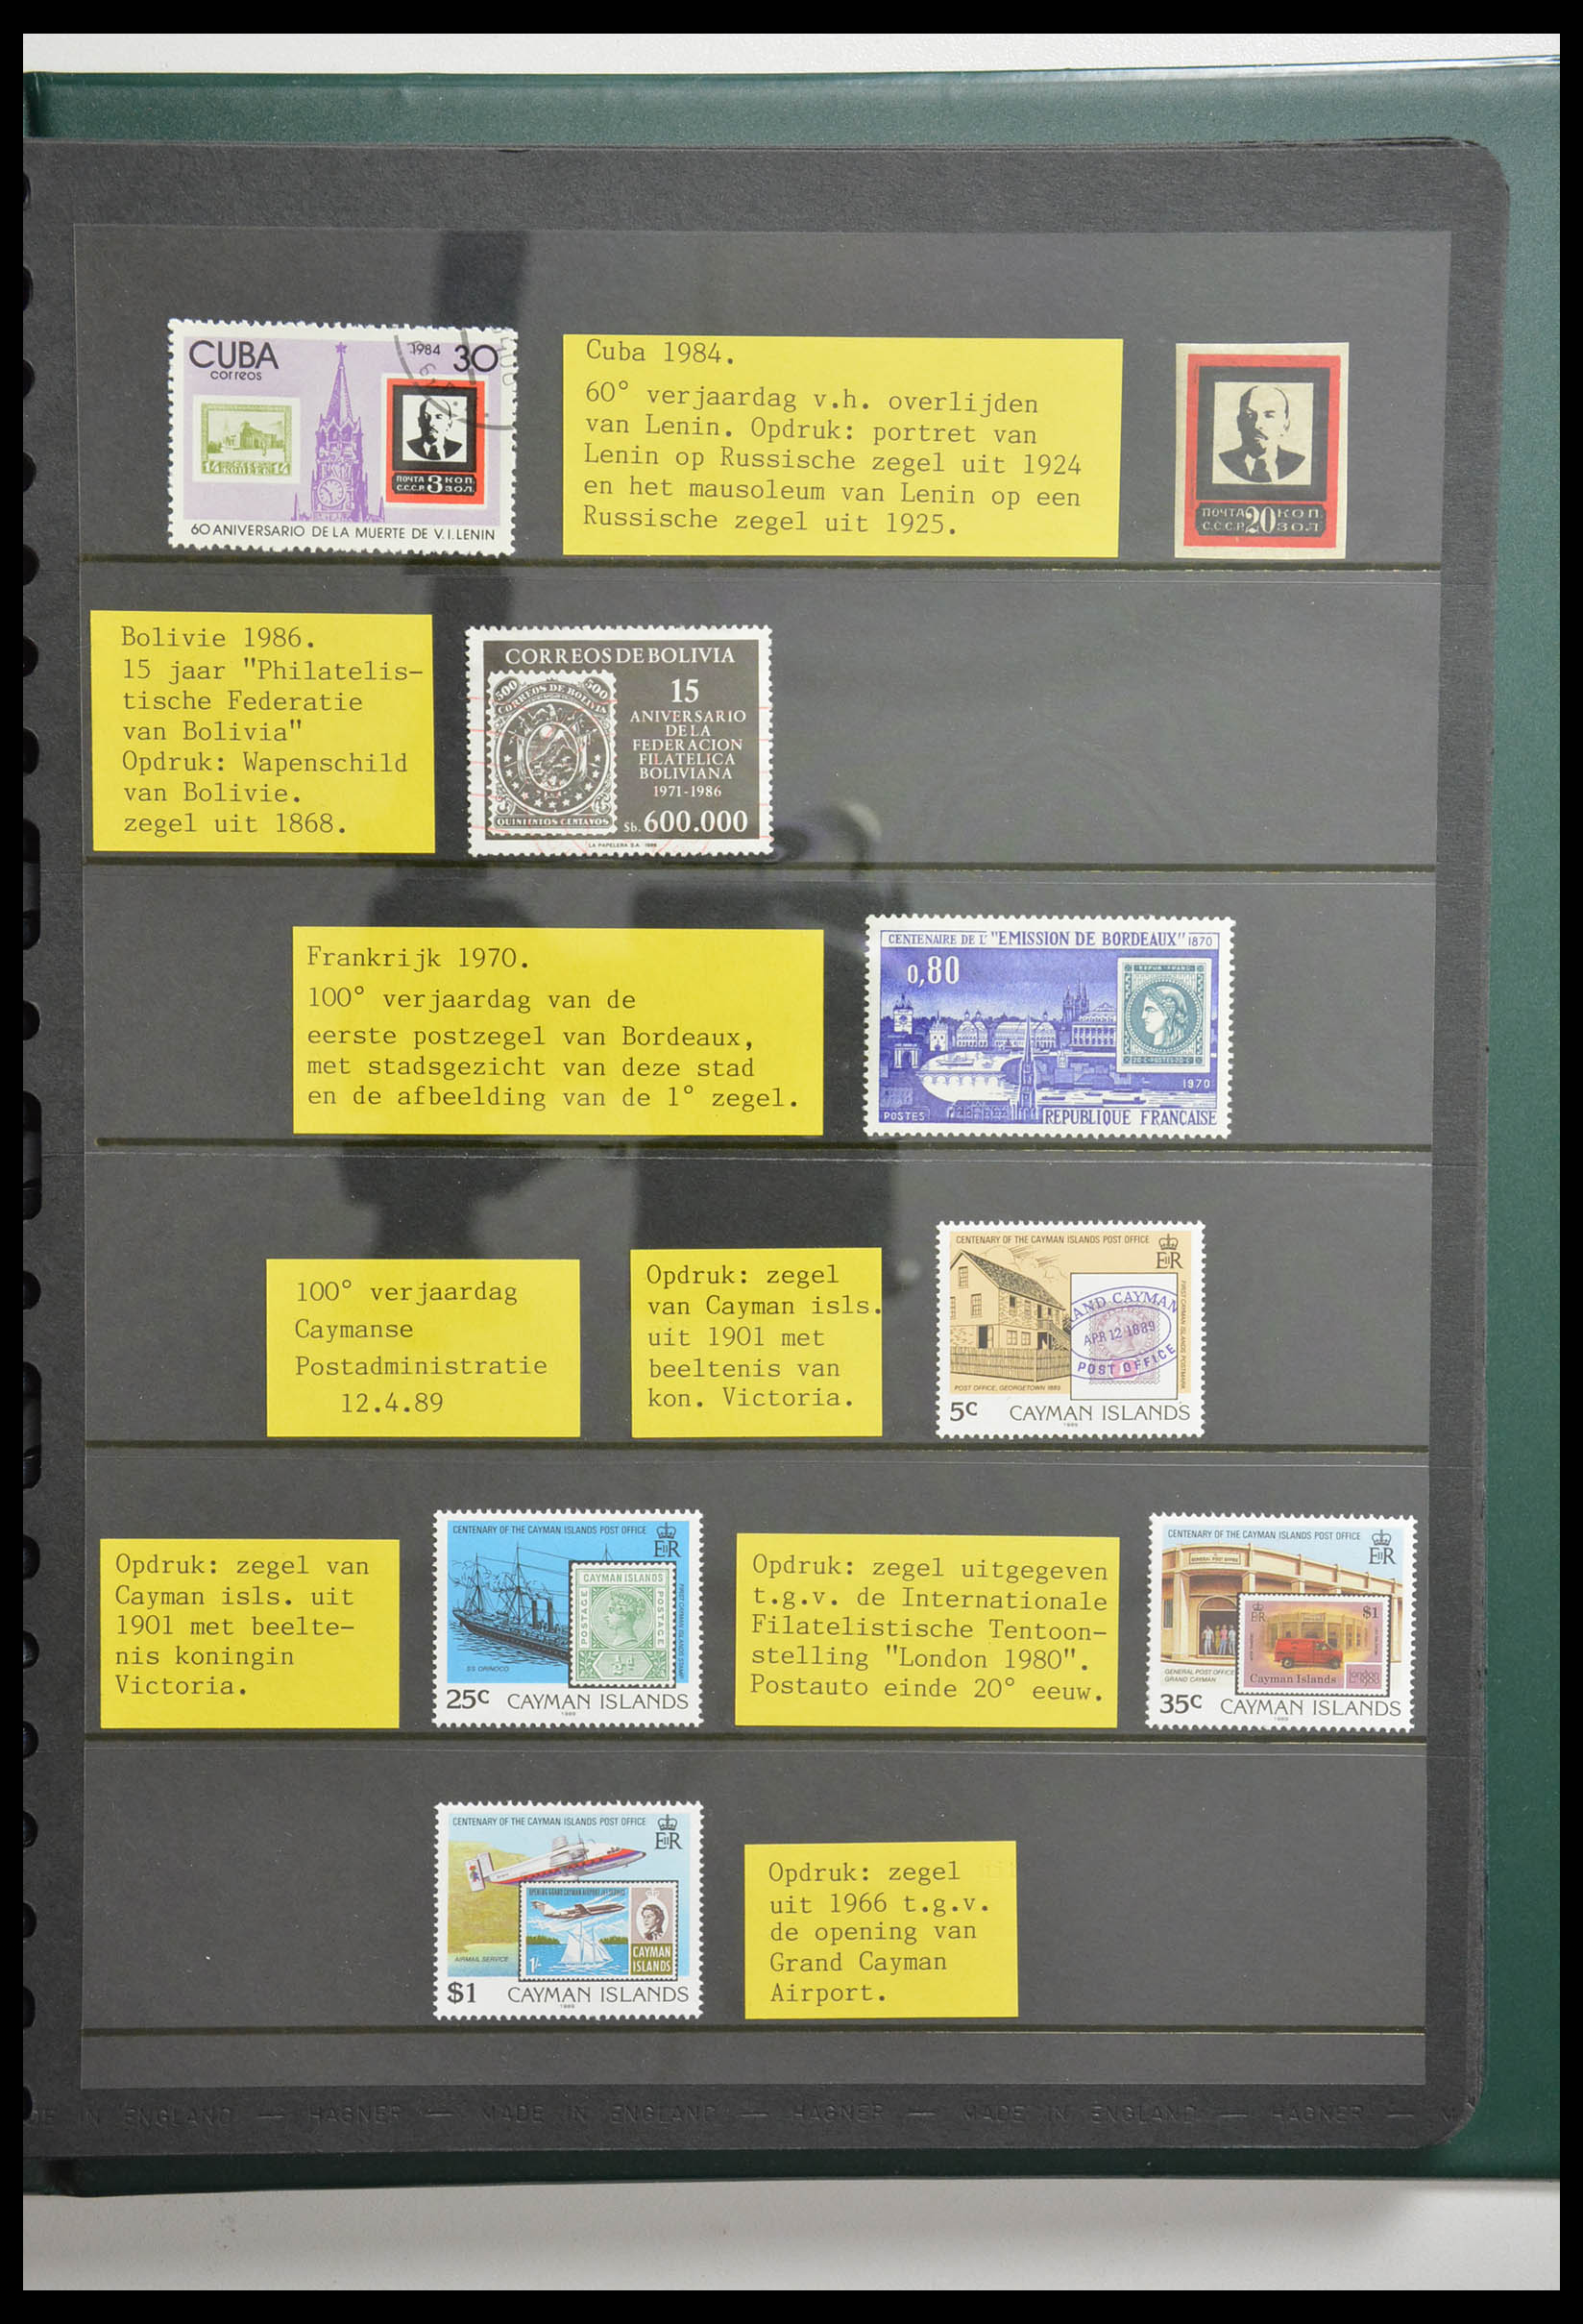 28337 061 - 28337 Postzegel op postzegel 1840-2001.